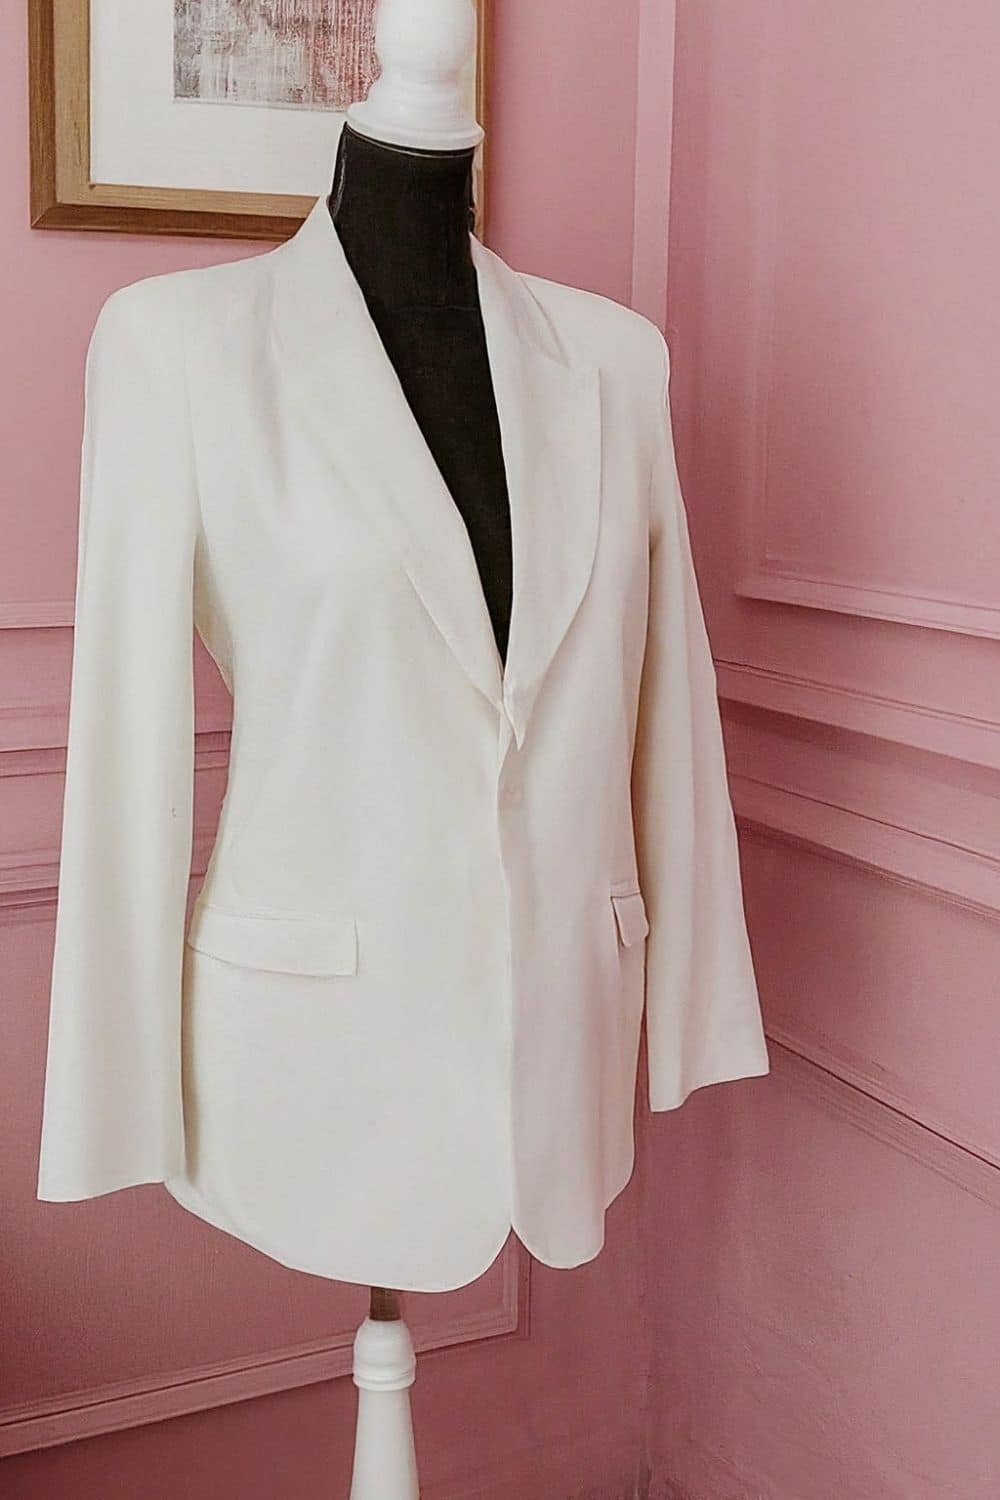 Mannequin wearing a white blazer in pink room